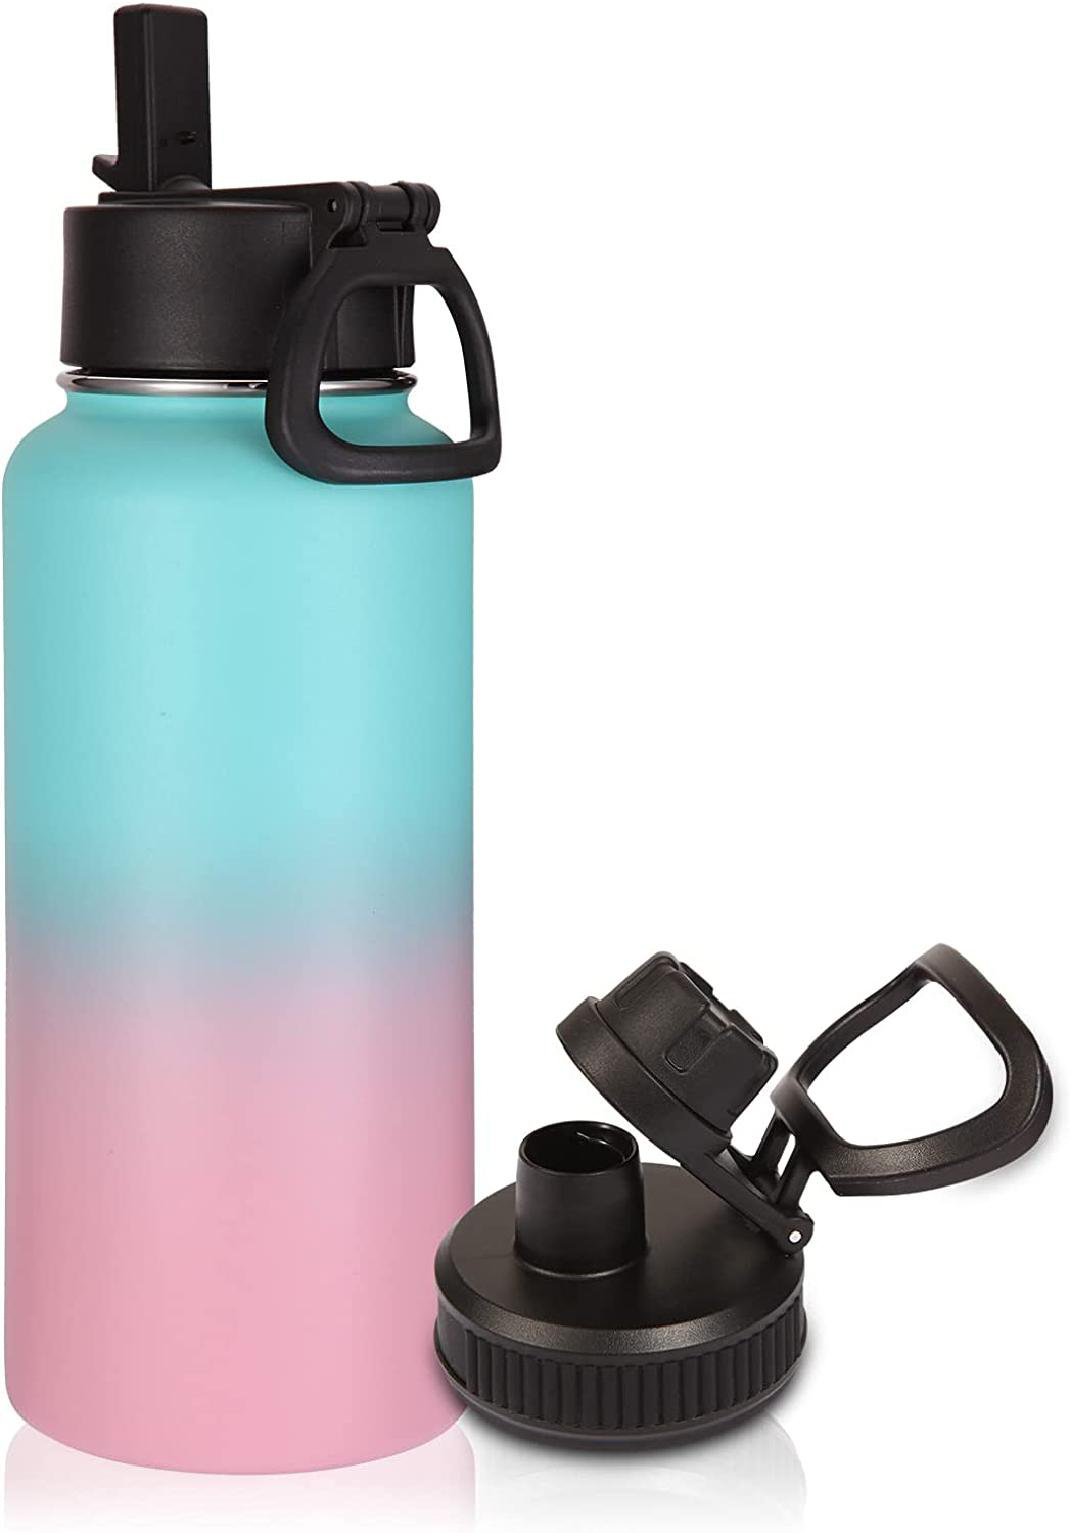 JoyJolt 32 oz. Pink Vacuum Insulated Stainless Steel Water Bottle